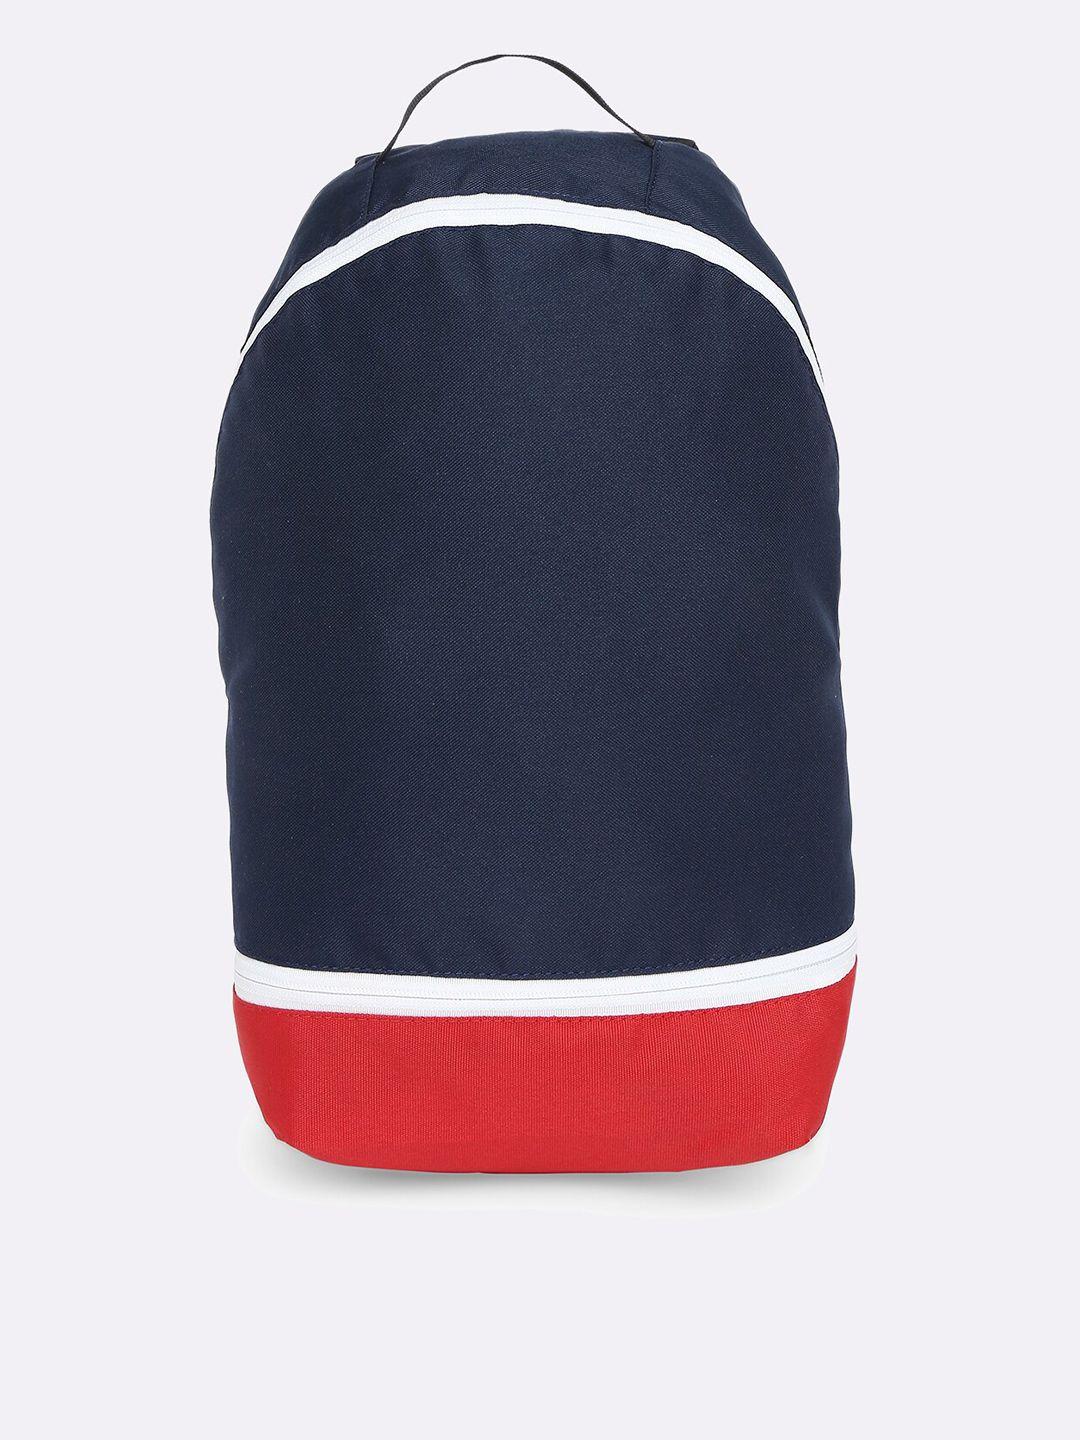 bewakoof unisex blue & red colourblocked backpack